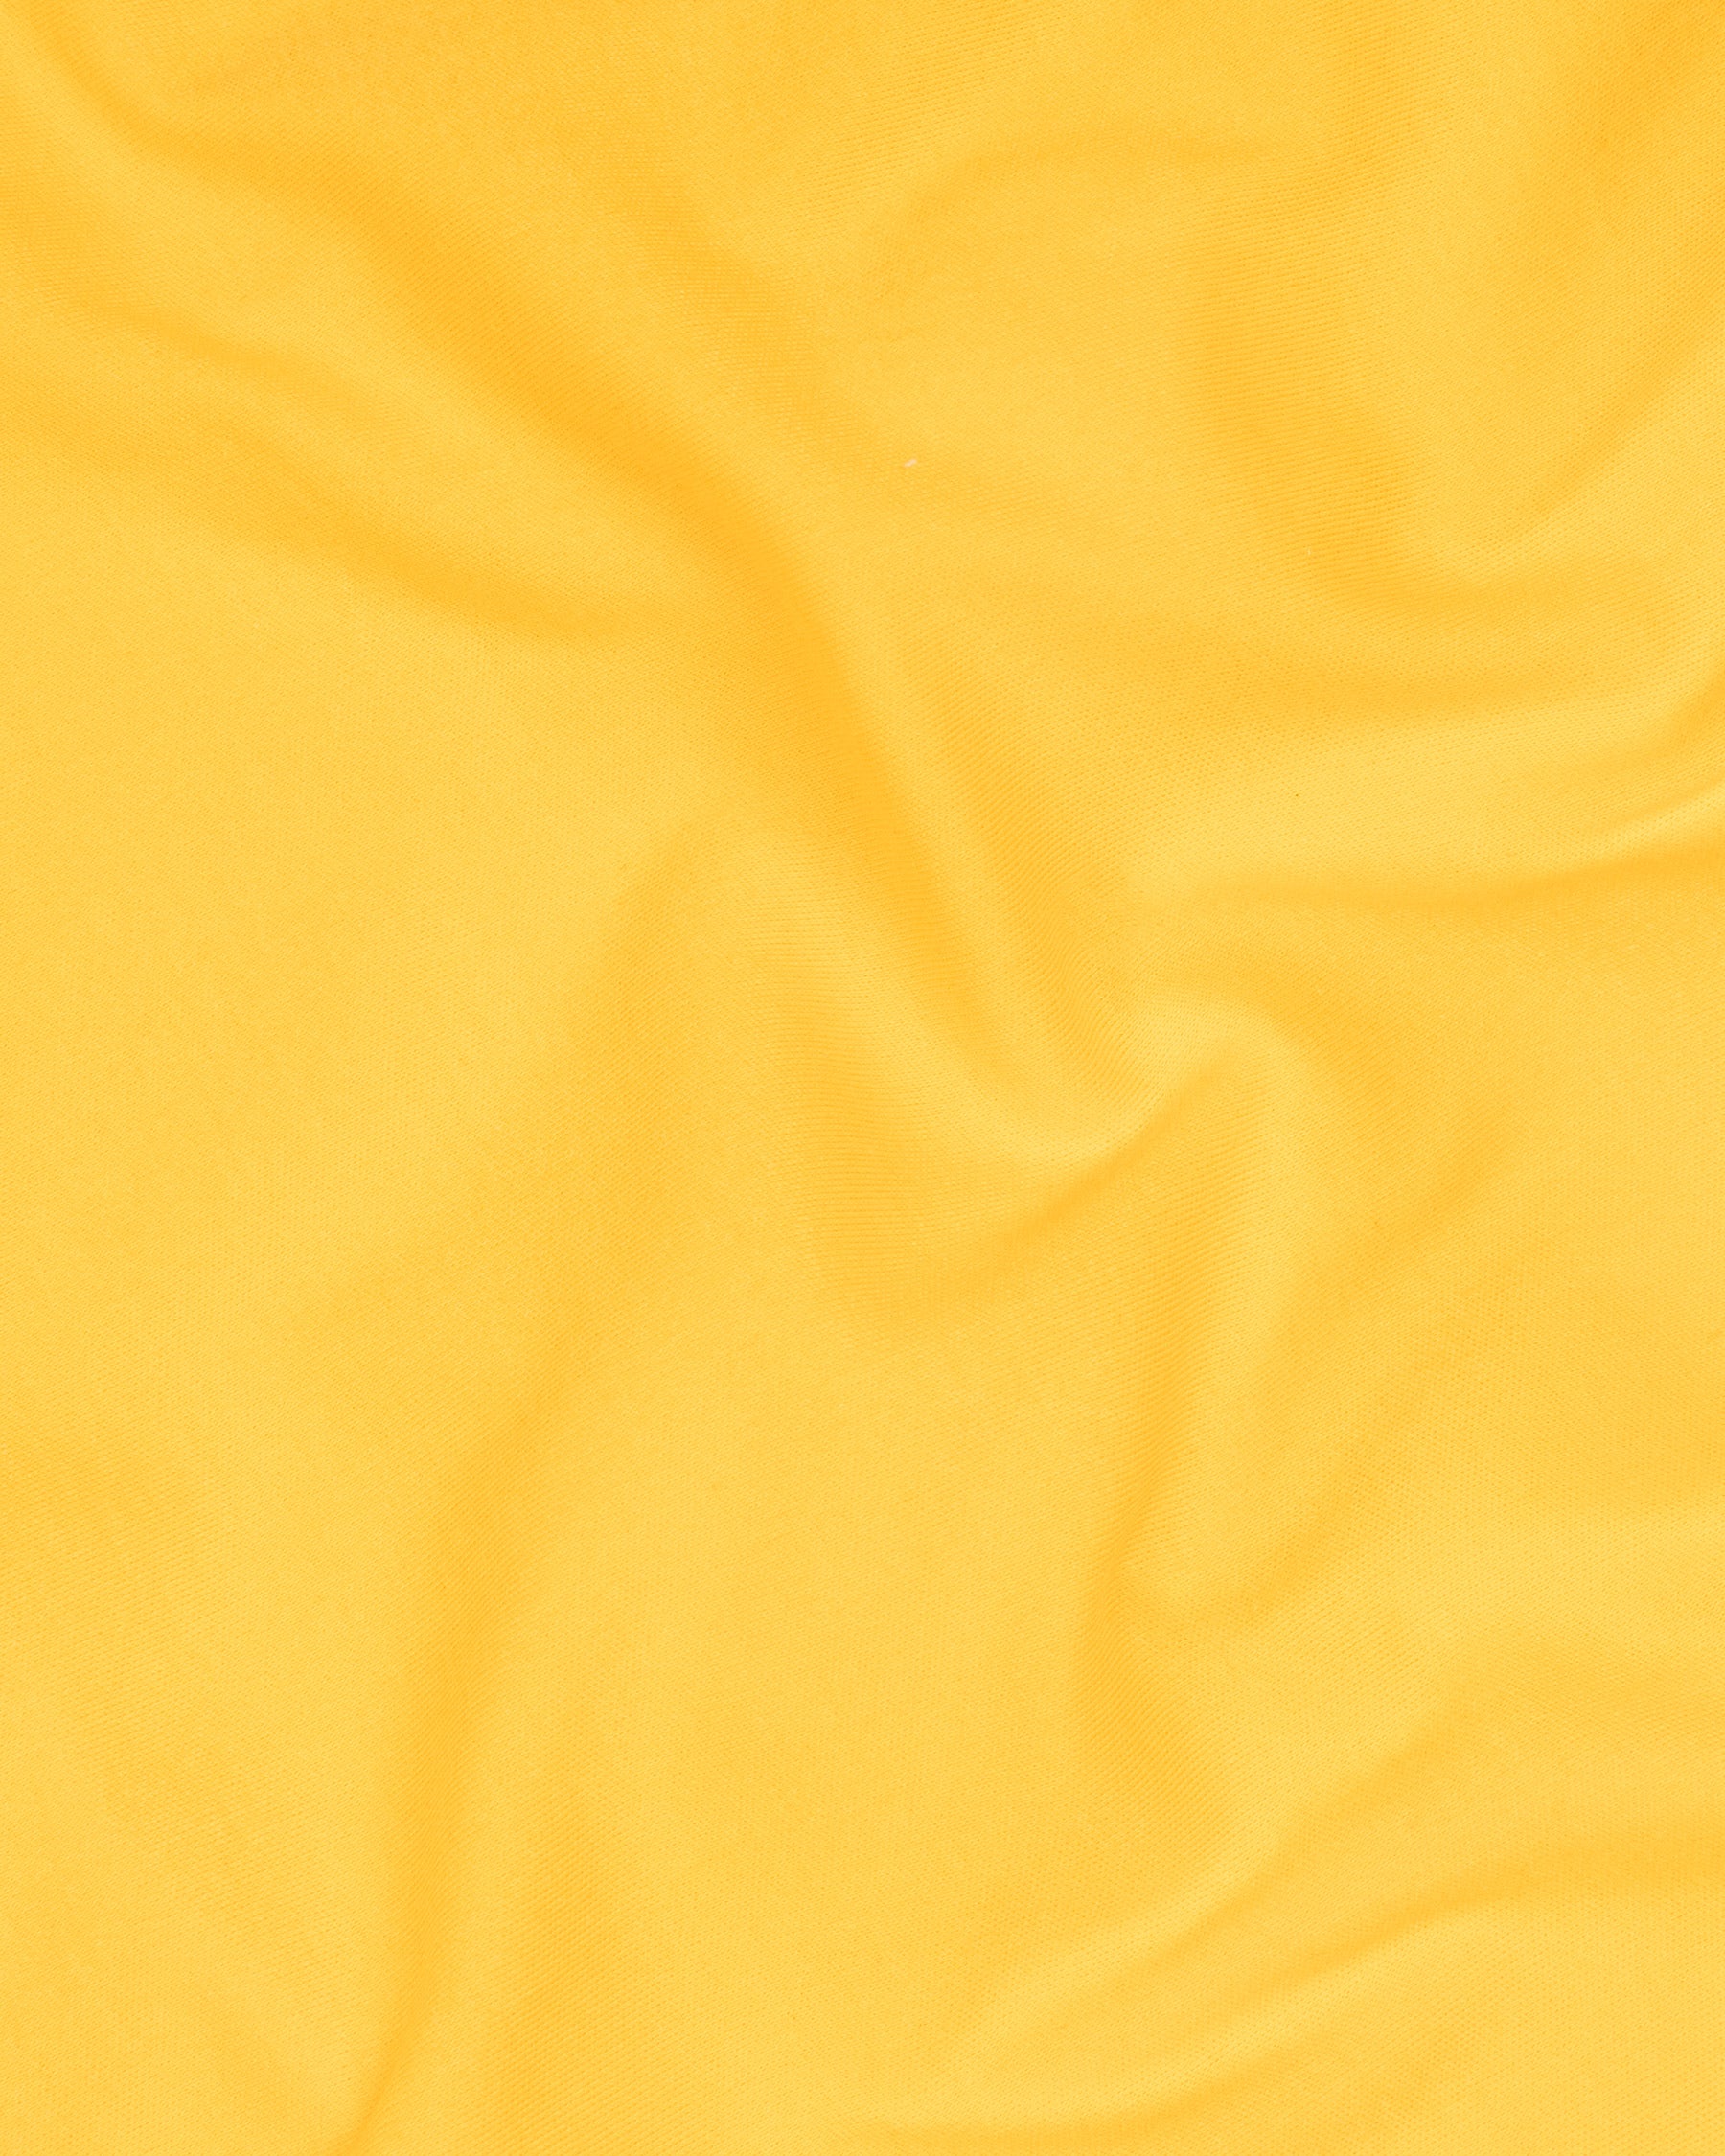 Golden Tainoi Yellow Super soft heavyweight premium cotton winter T-shirt TS410-S, TS410-M, TS410-L, TS410-XL, TS410-XXL, TS410-3XL, TS410-4XL